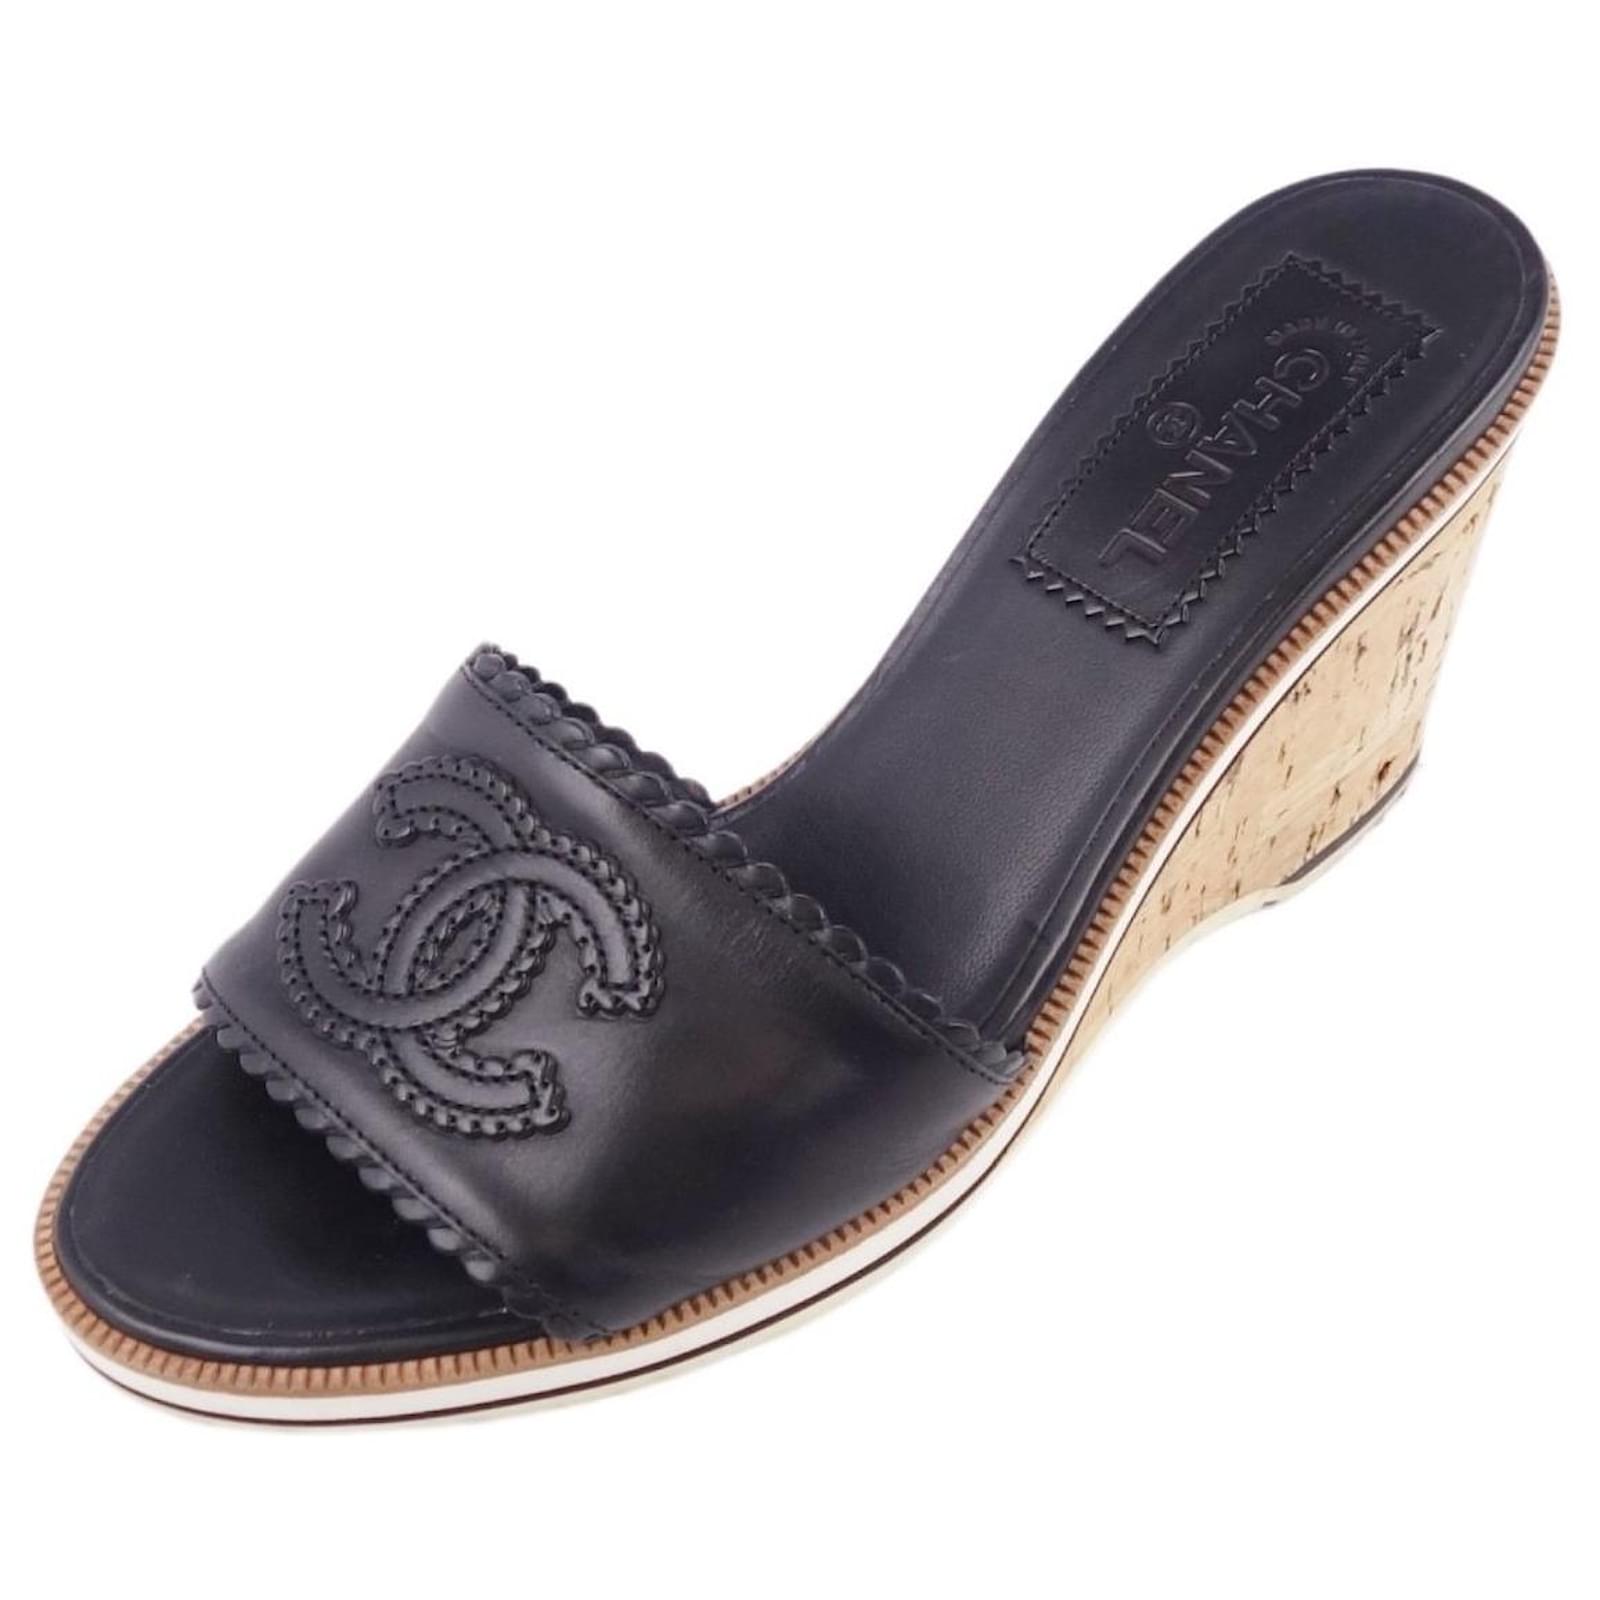 CHANEL Sandals Coco Mark G25986 Mule Cork Wedge Sole Shoes Shoes Black Size  36.5